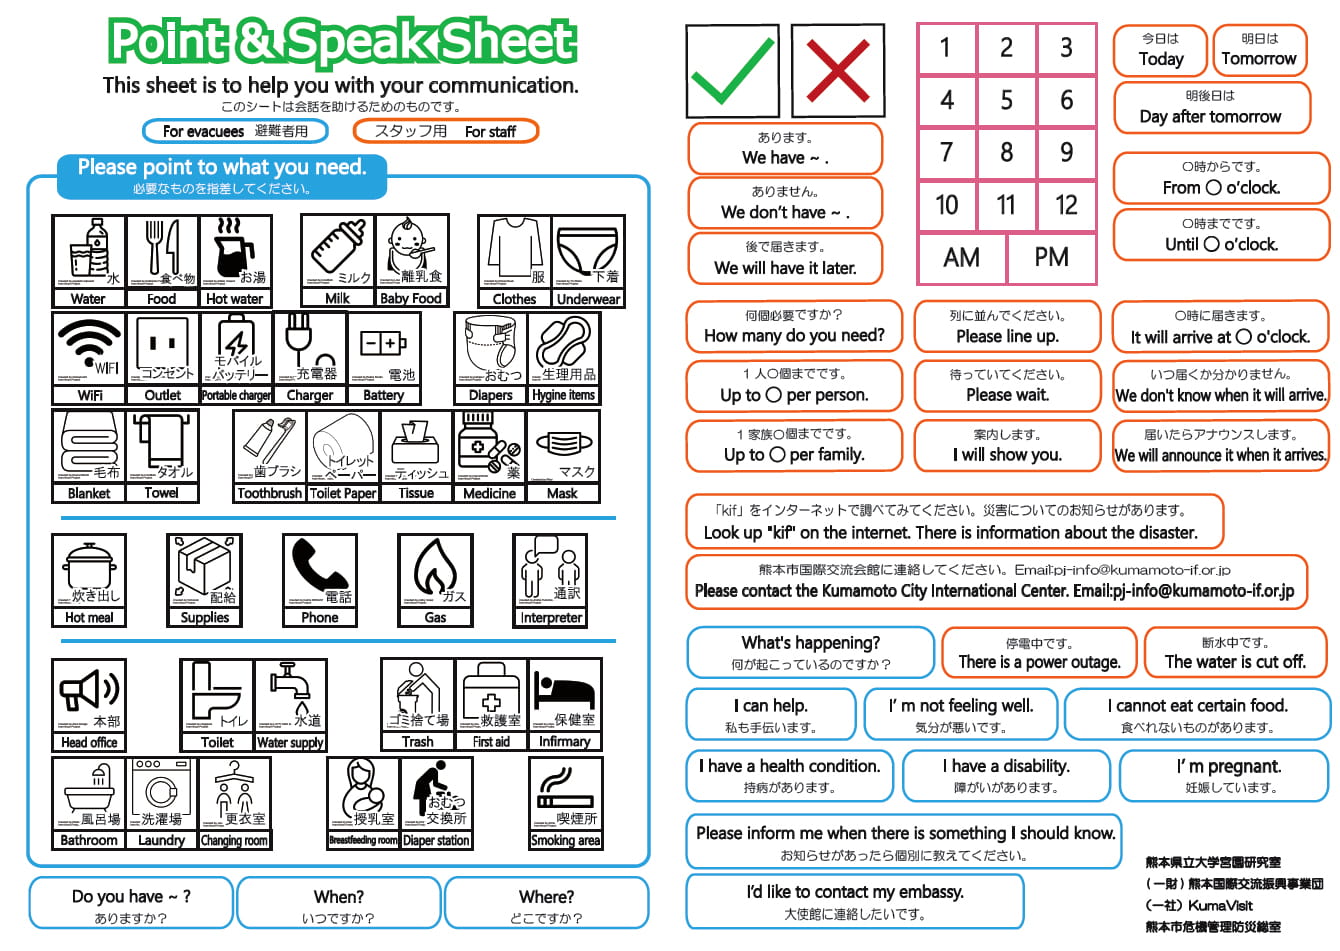 Point & Speak Sheet in English